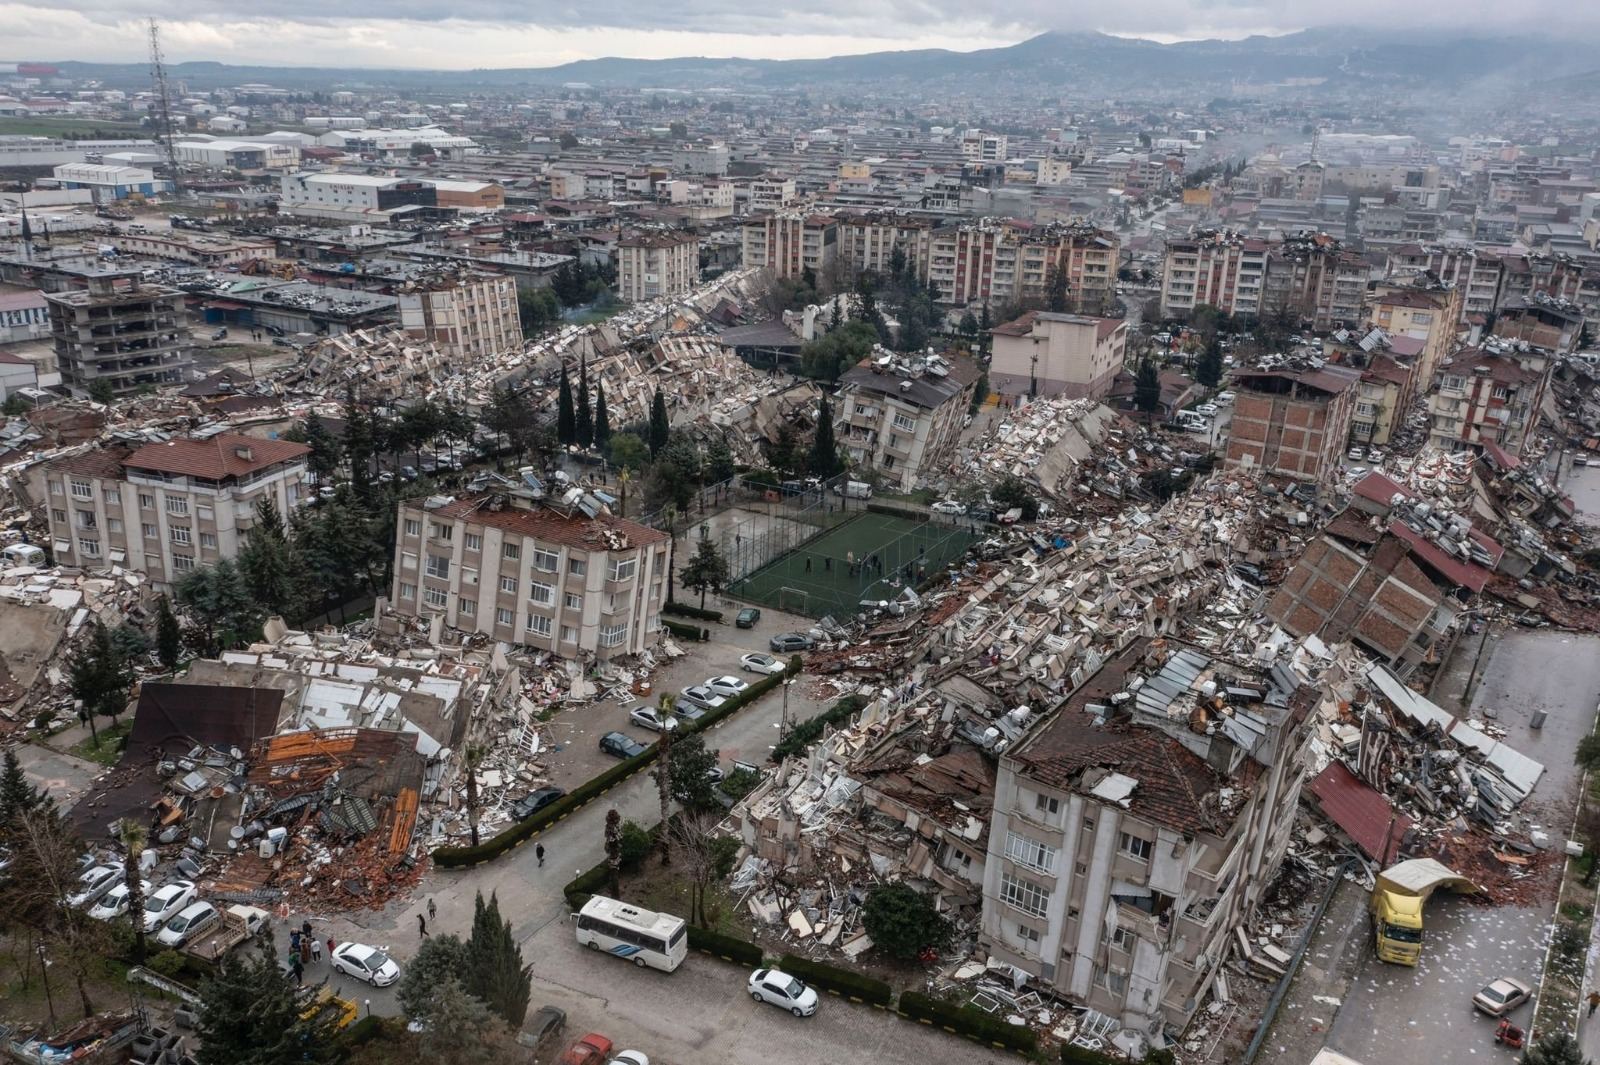 Türkiye earthquake death toll exceeds 50,000